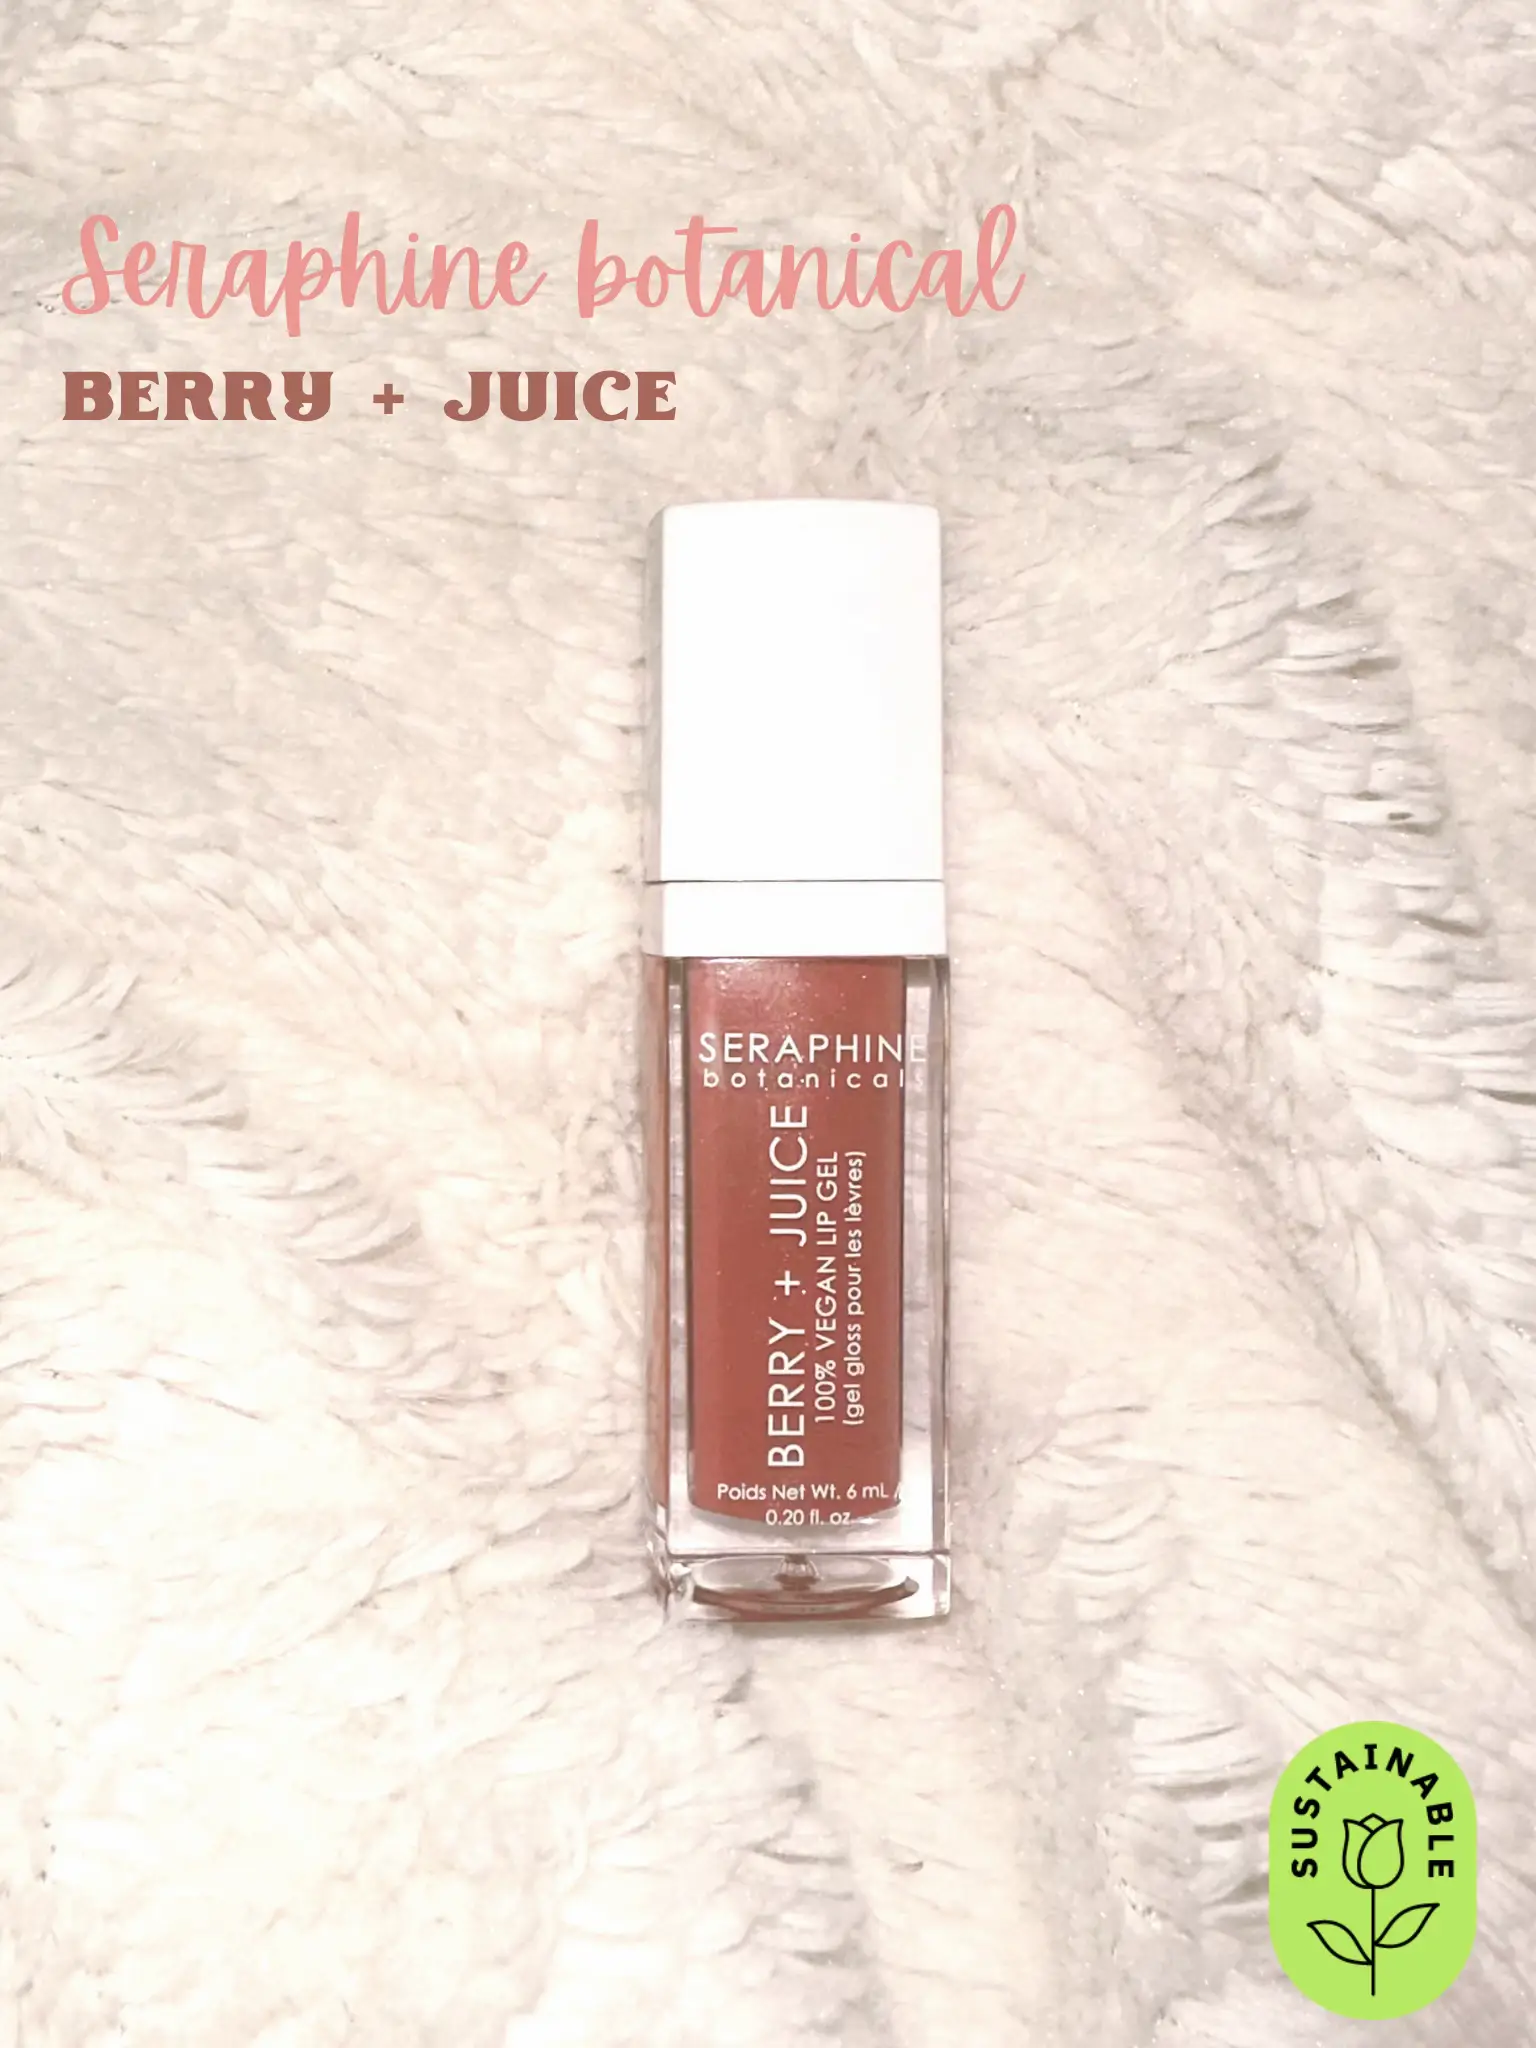 Berry + Juice - 100% Vegan Lip Gel – Seraphine Botanicals